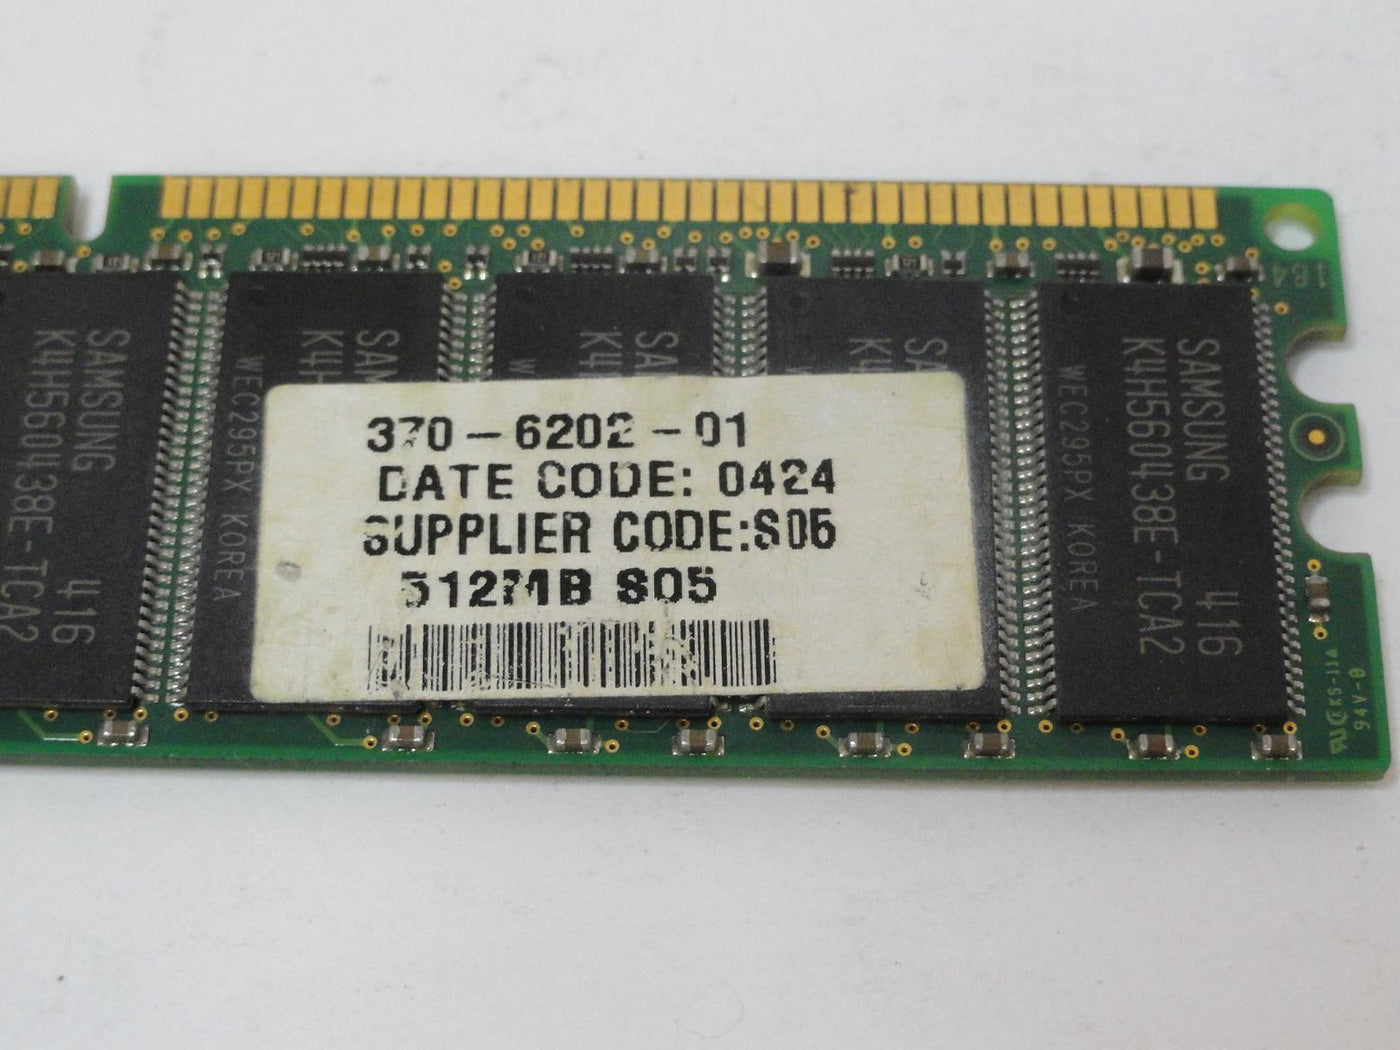 PR25385_PC2100R-20331-Z_Samsung Sun 512MB PC2100 DDR-266MHz DIMM RAM - Image4